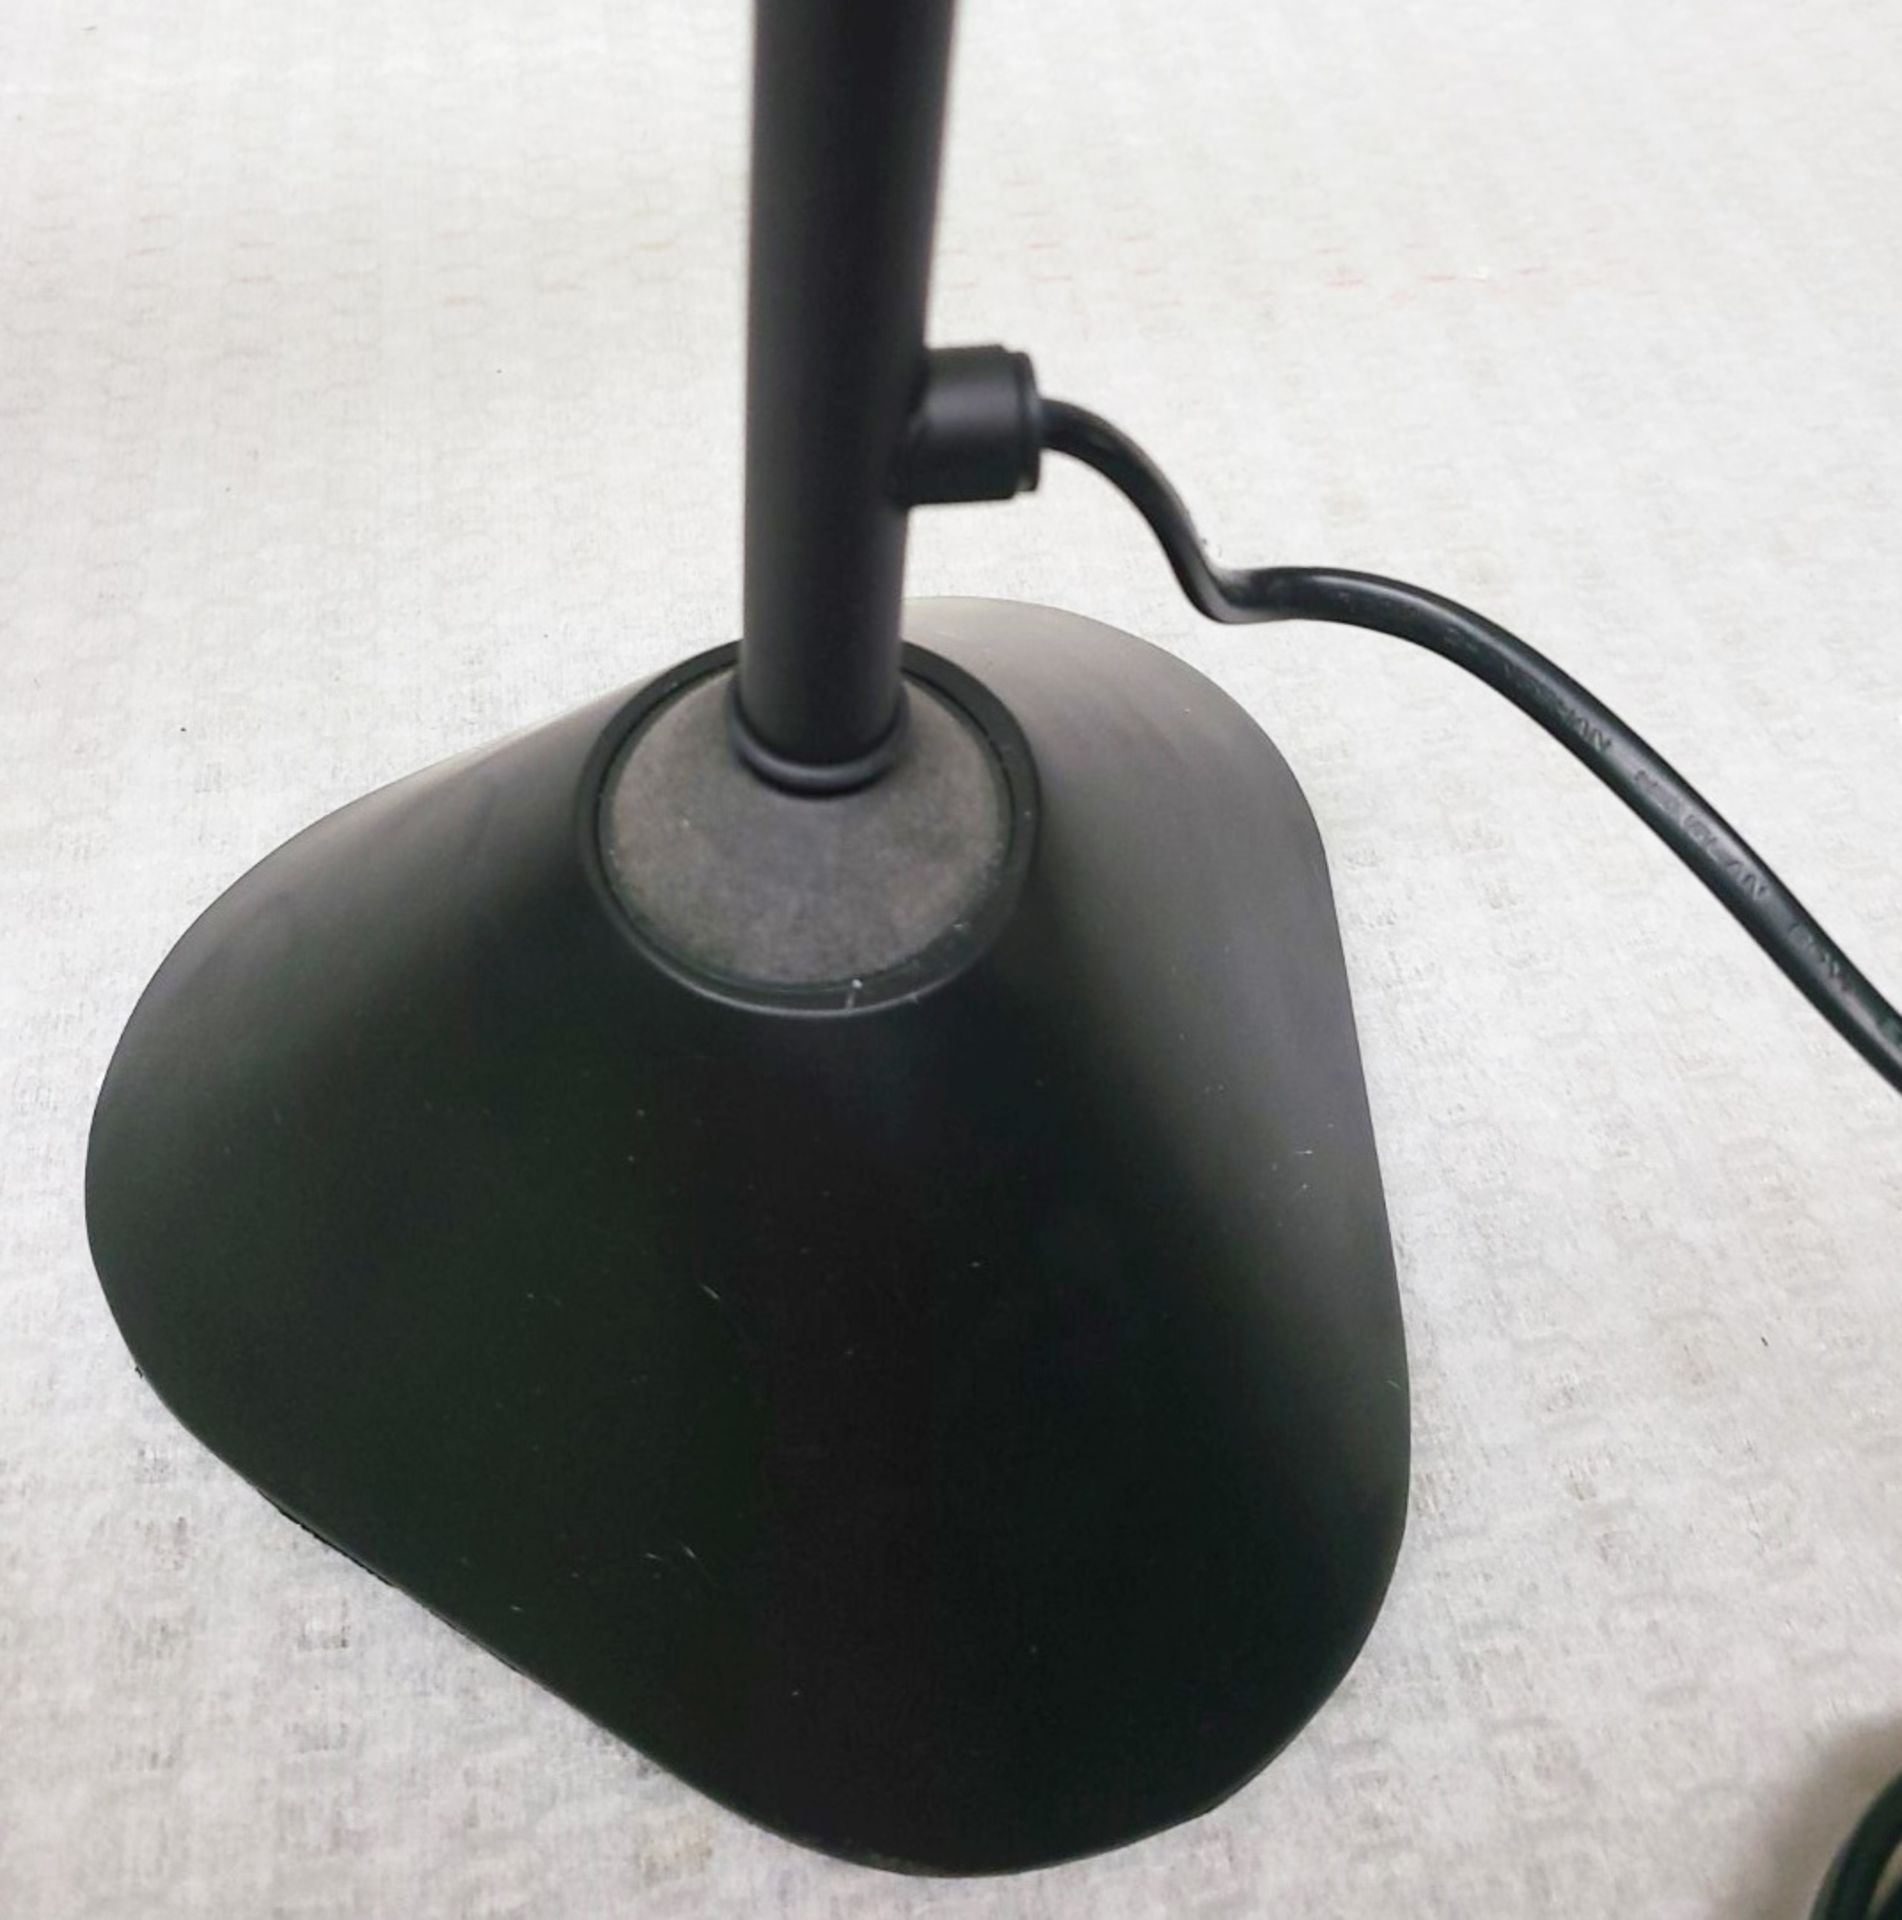 1 x BLUESUNTREE Retro Task Lamp W/ Adjustable Head & Neck With Ball & Socket Base With Ochre Shade - Image 5 of 9